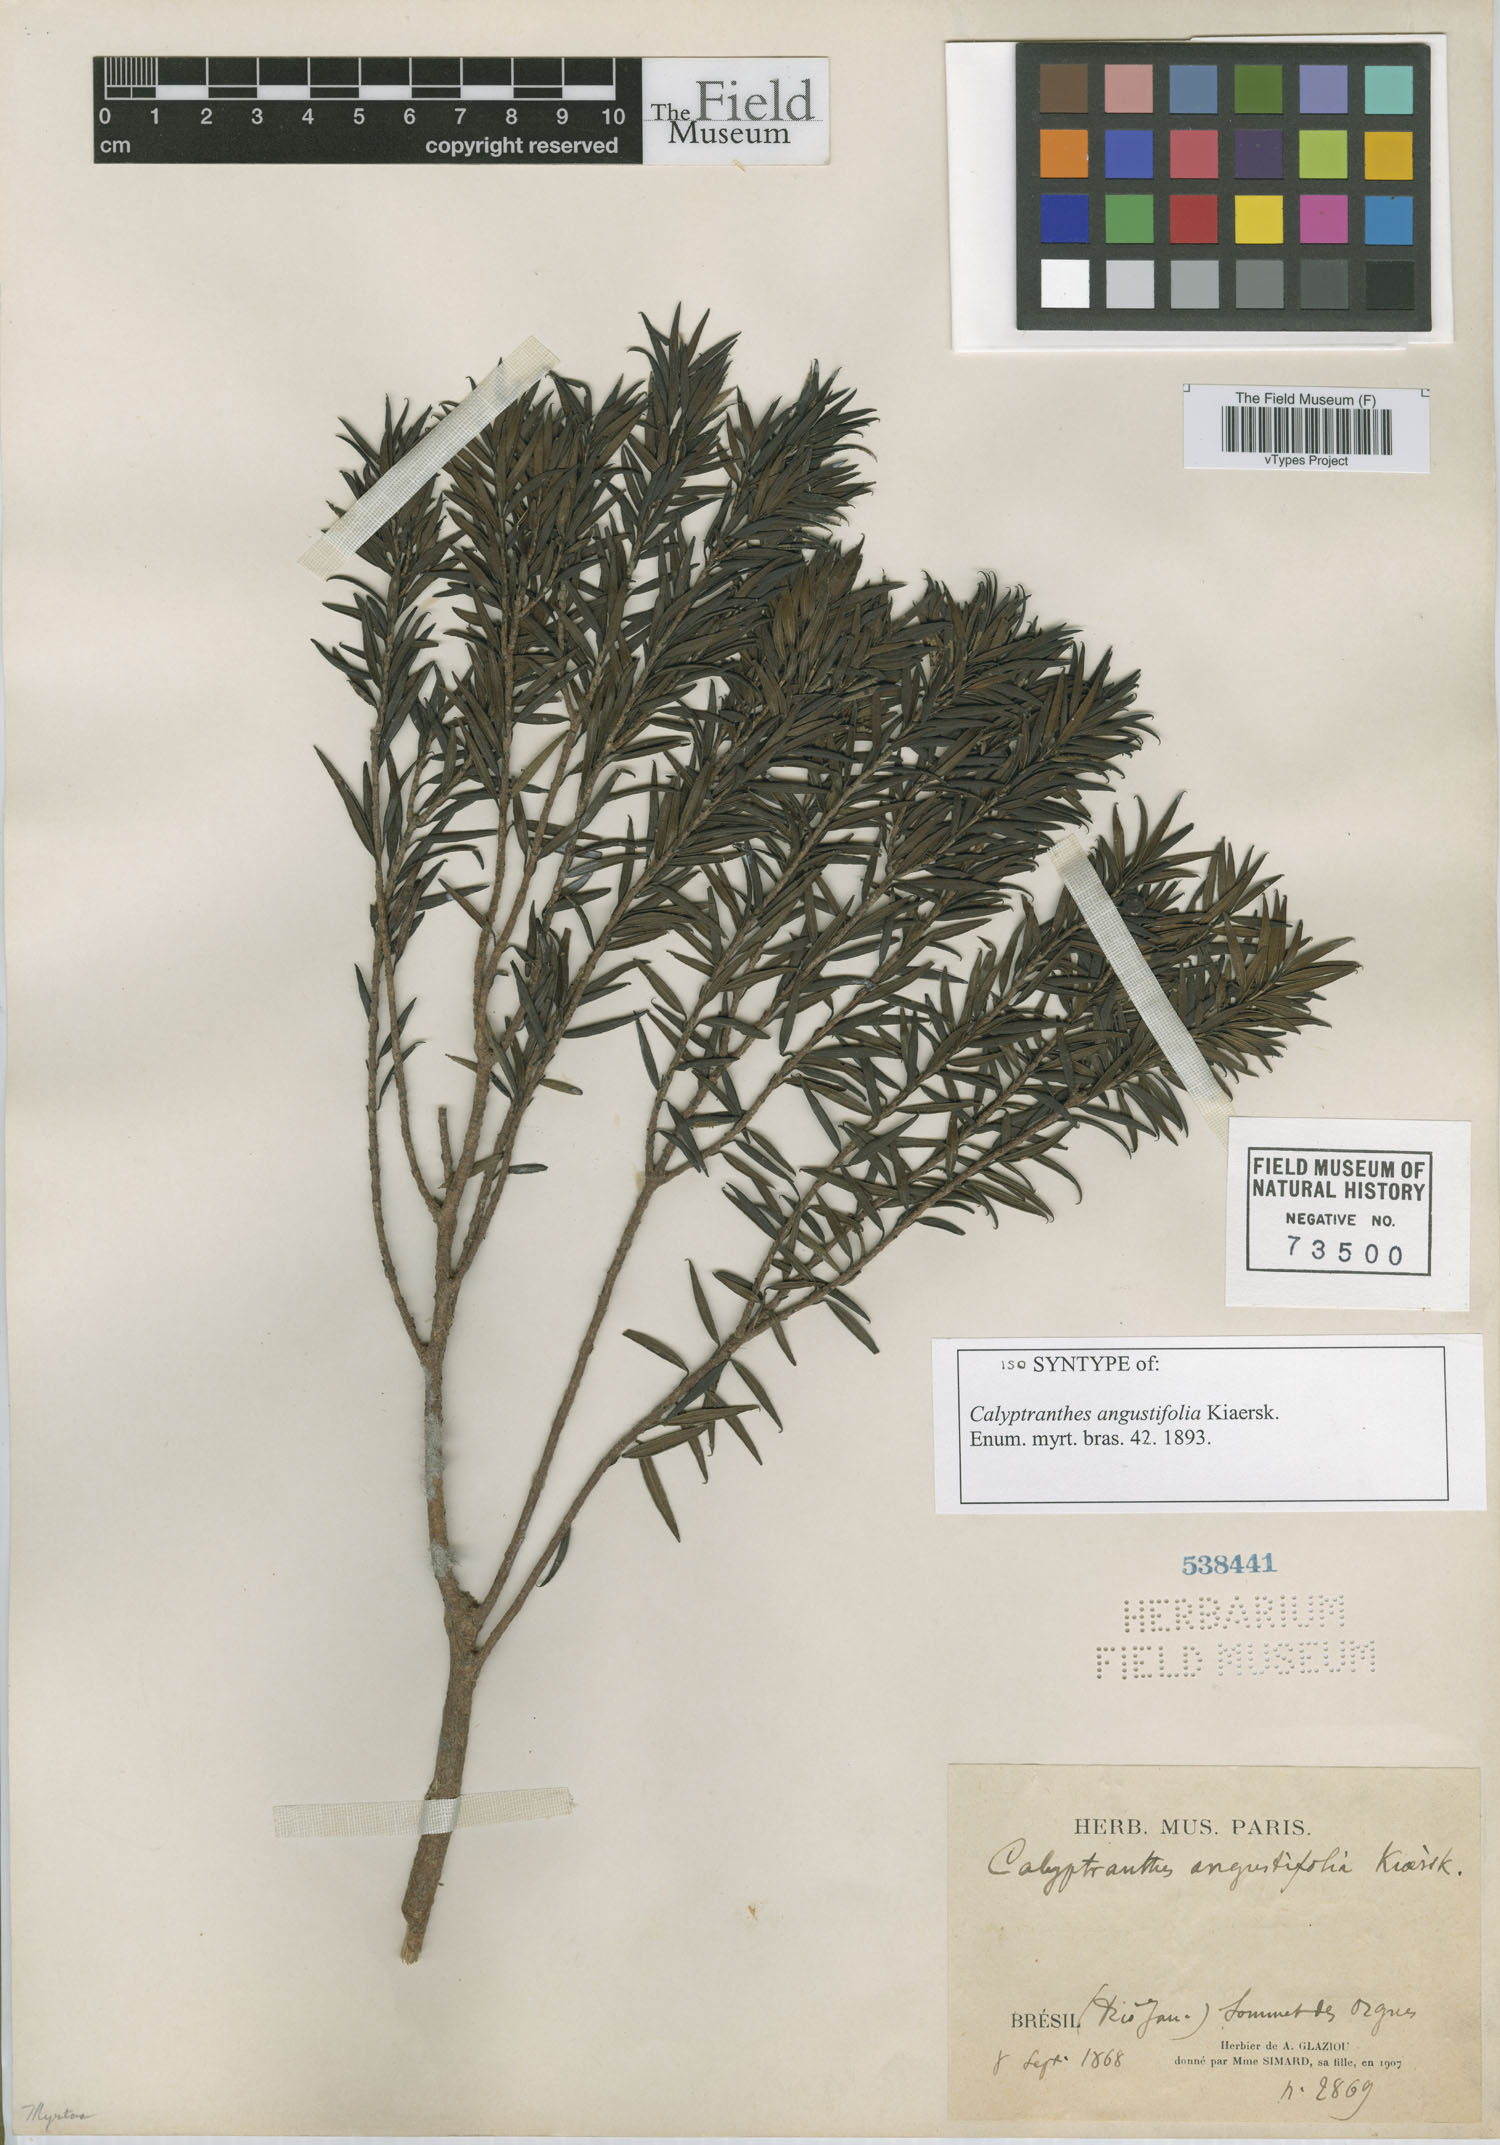 Calyptranthes angustifolia image